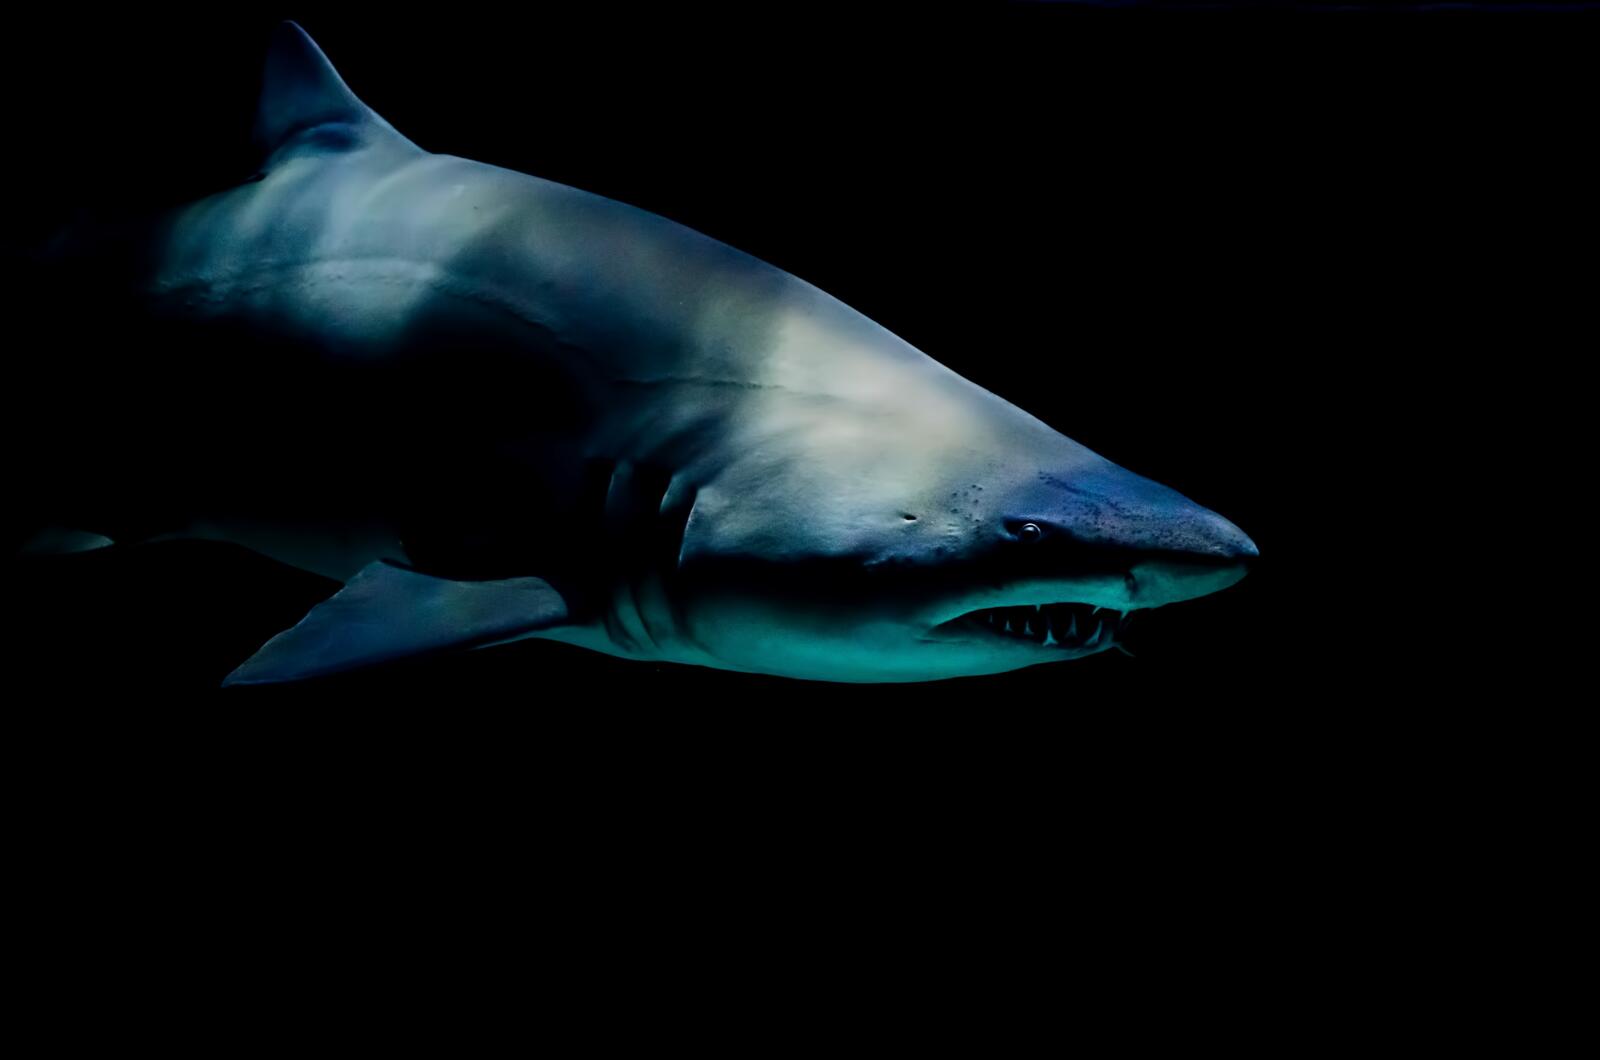 Бесплатное фото Акула в темноте